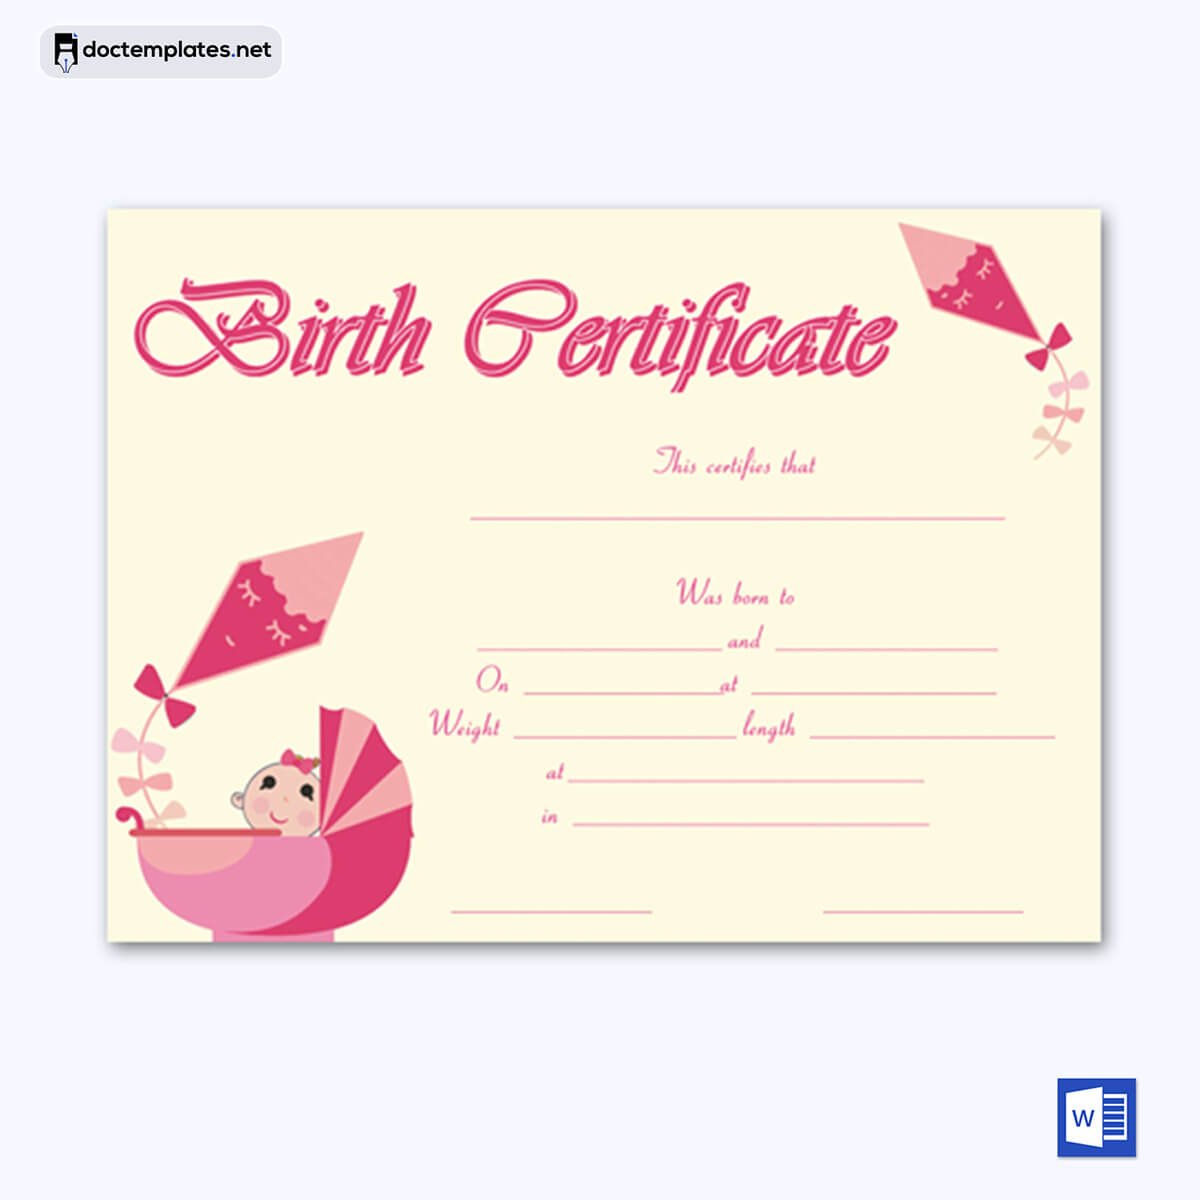 Image of Blank birth certificate PDF
Blank birth certificate PDF
09